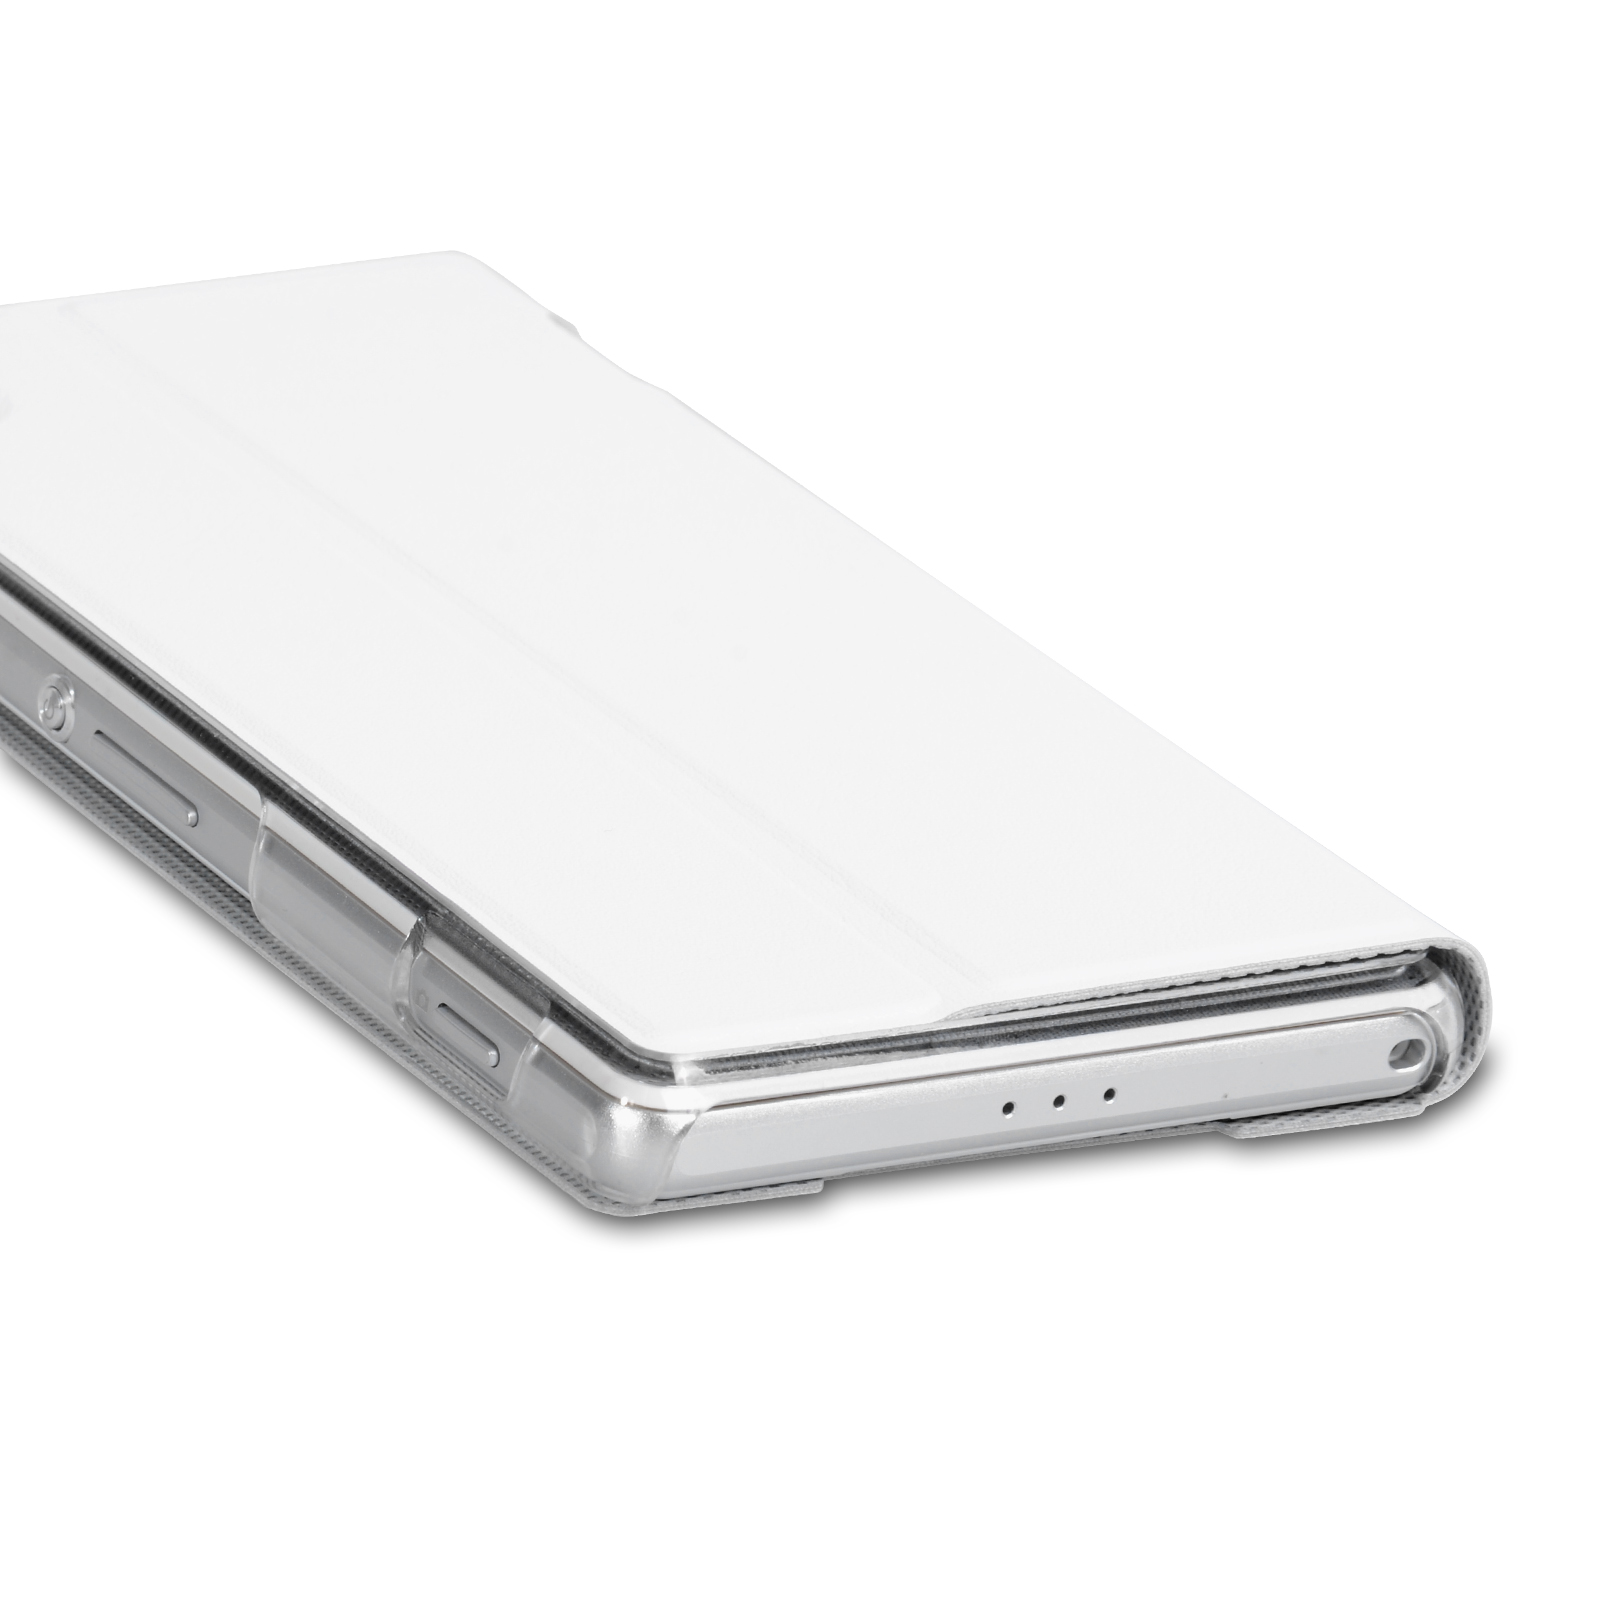 Roxfit Standing Book Case for Sony Xperia Z2 - Polar White